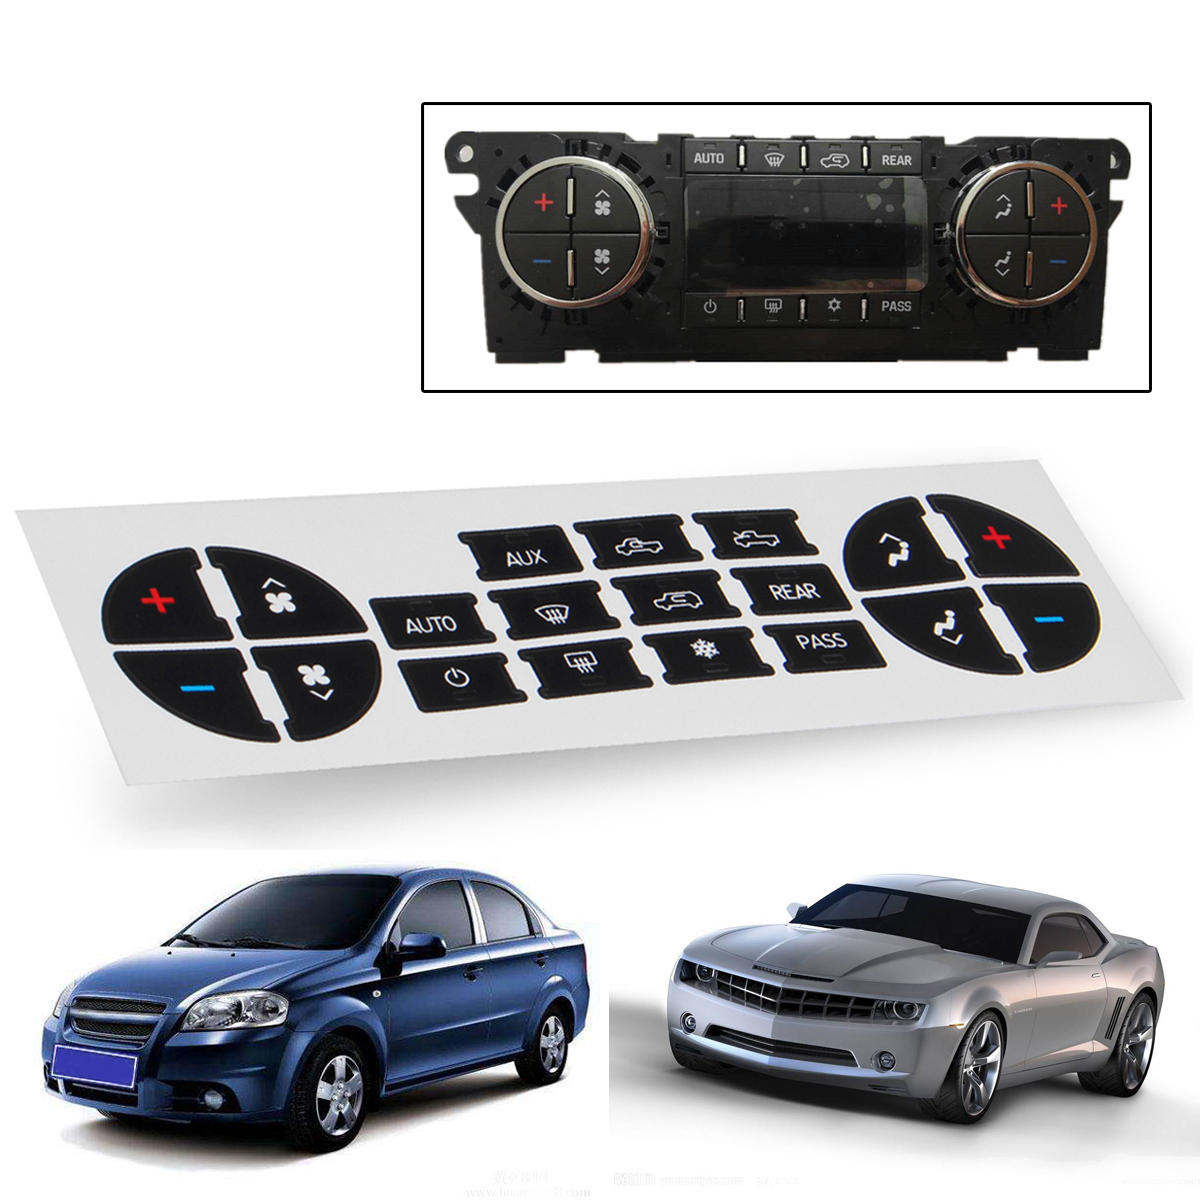 AC knop reparatieset Dash vervanging 07-13 GM voertuigen auto sticker Stickers US VERKOPER